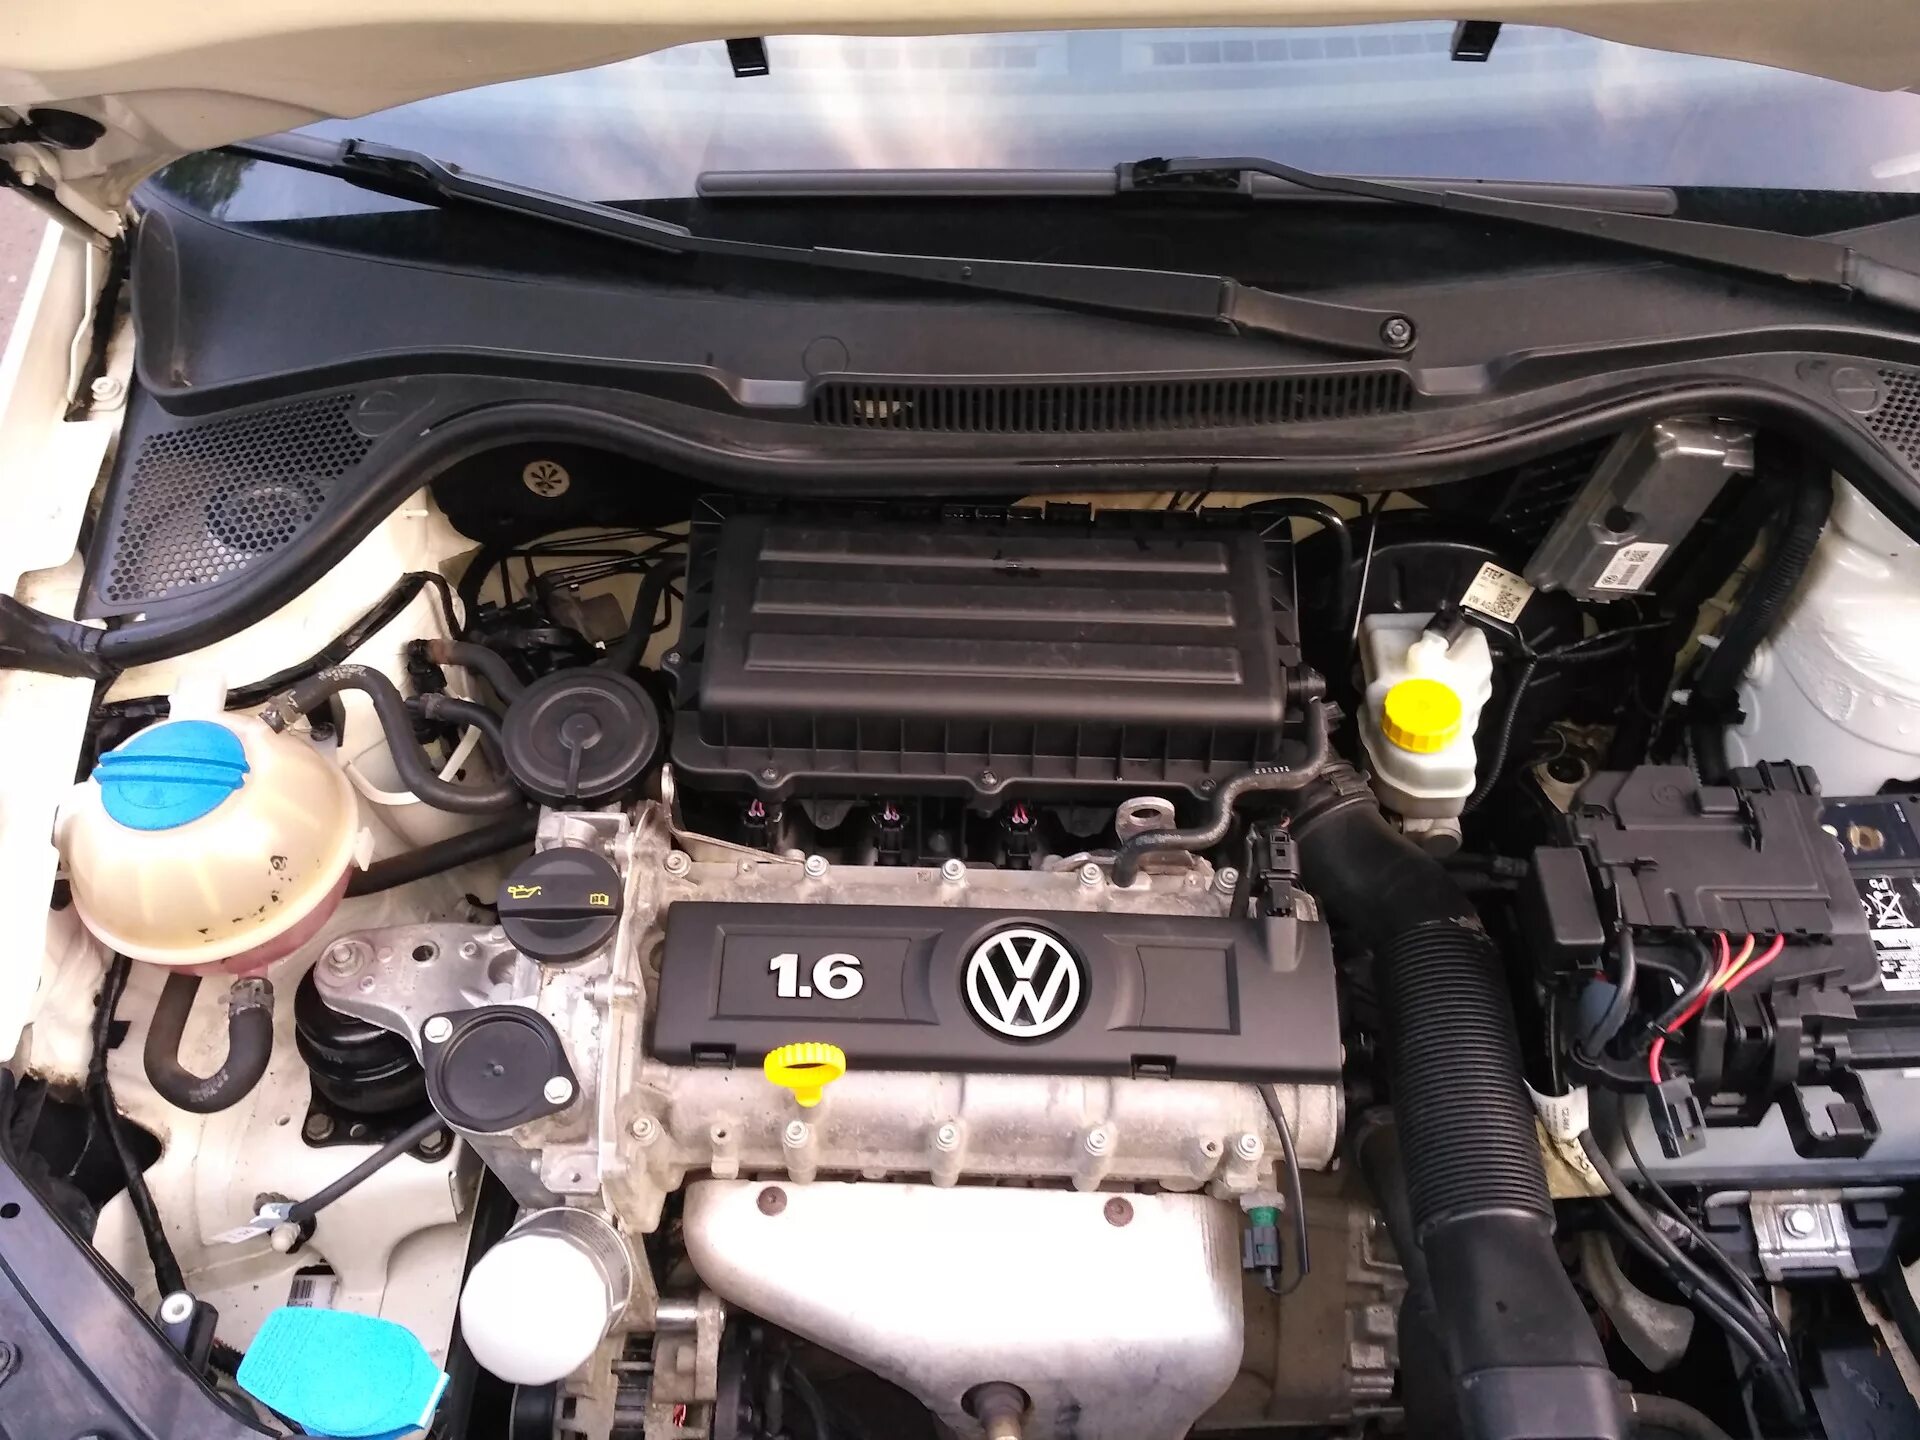 Volkswagen polo 1.6 двигателя. Мотор поло седан 1.6 105 л.с. Фольксваген поло ДВС 1.6. Двигатель Volkswagen Polo sedan 1.6. Двигатель поло седан 1.6 105.